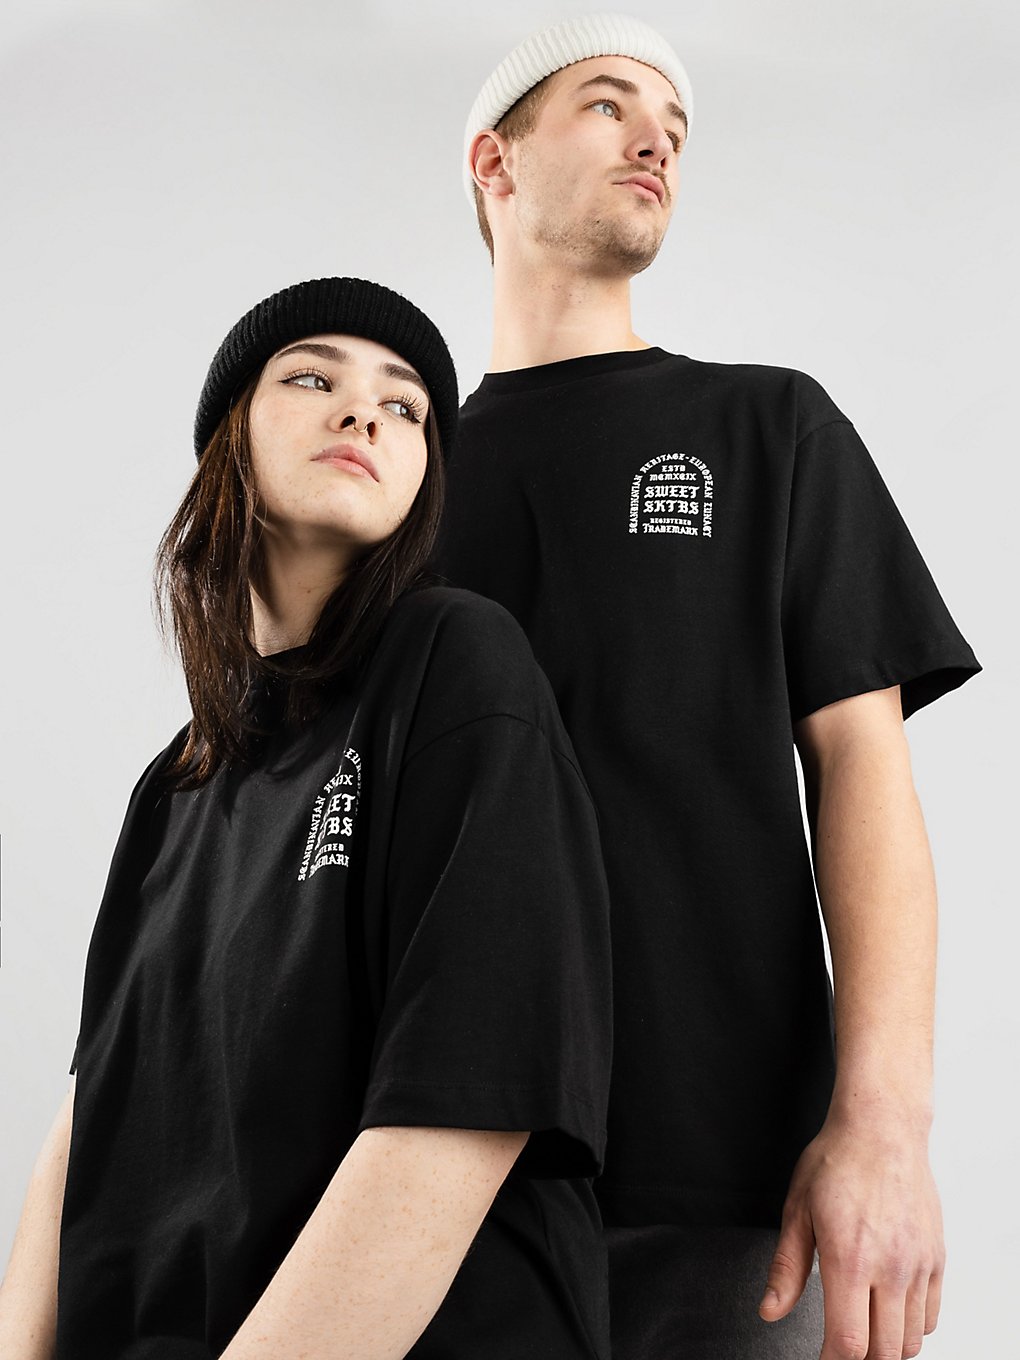 SWEET SKTBS Sweet Loose Punk T-Shirt black kaufen